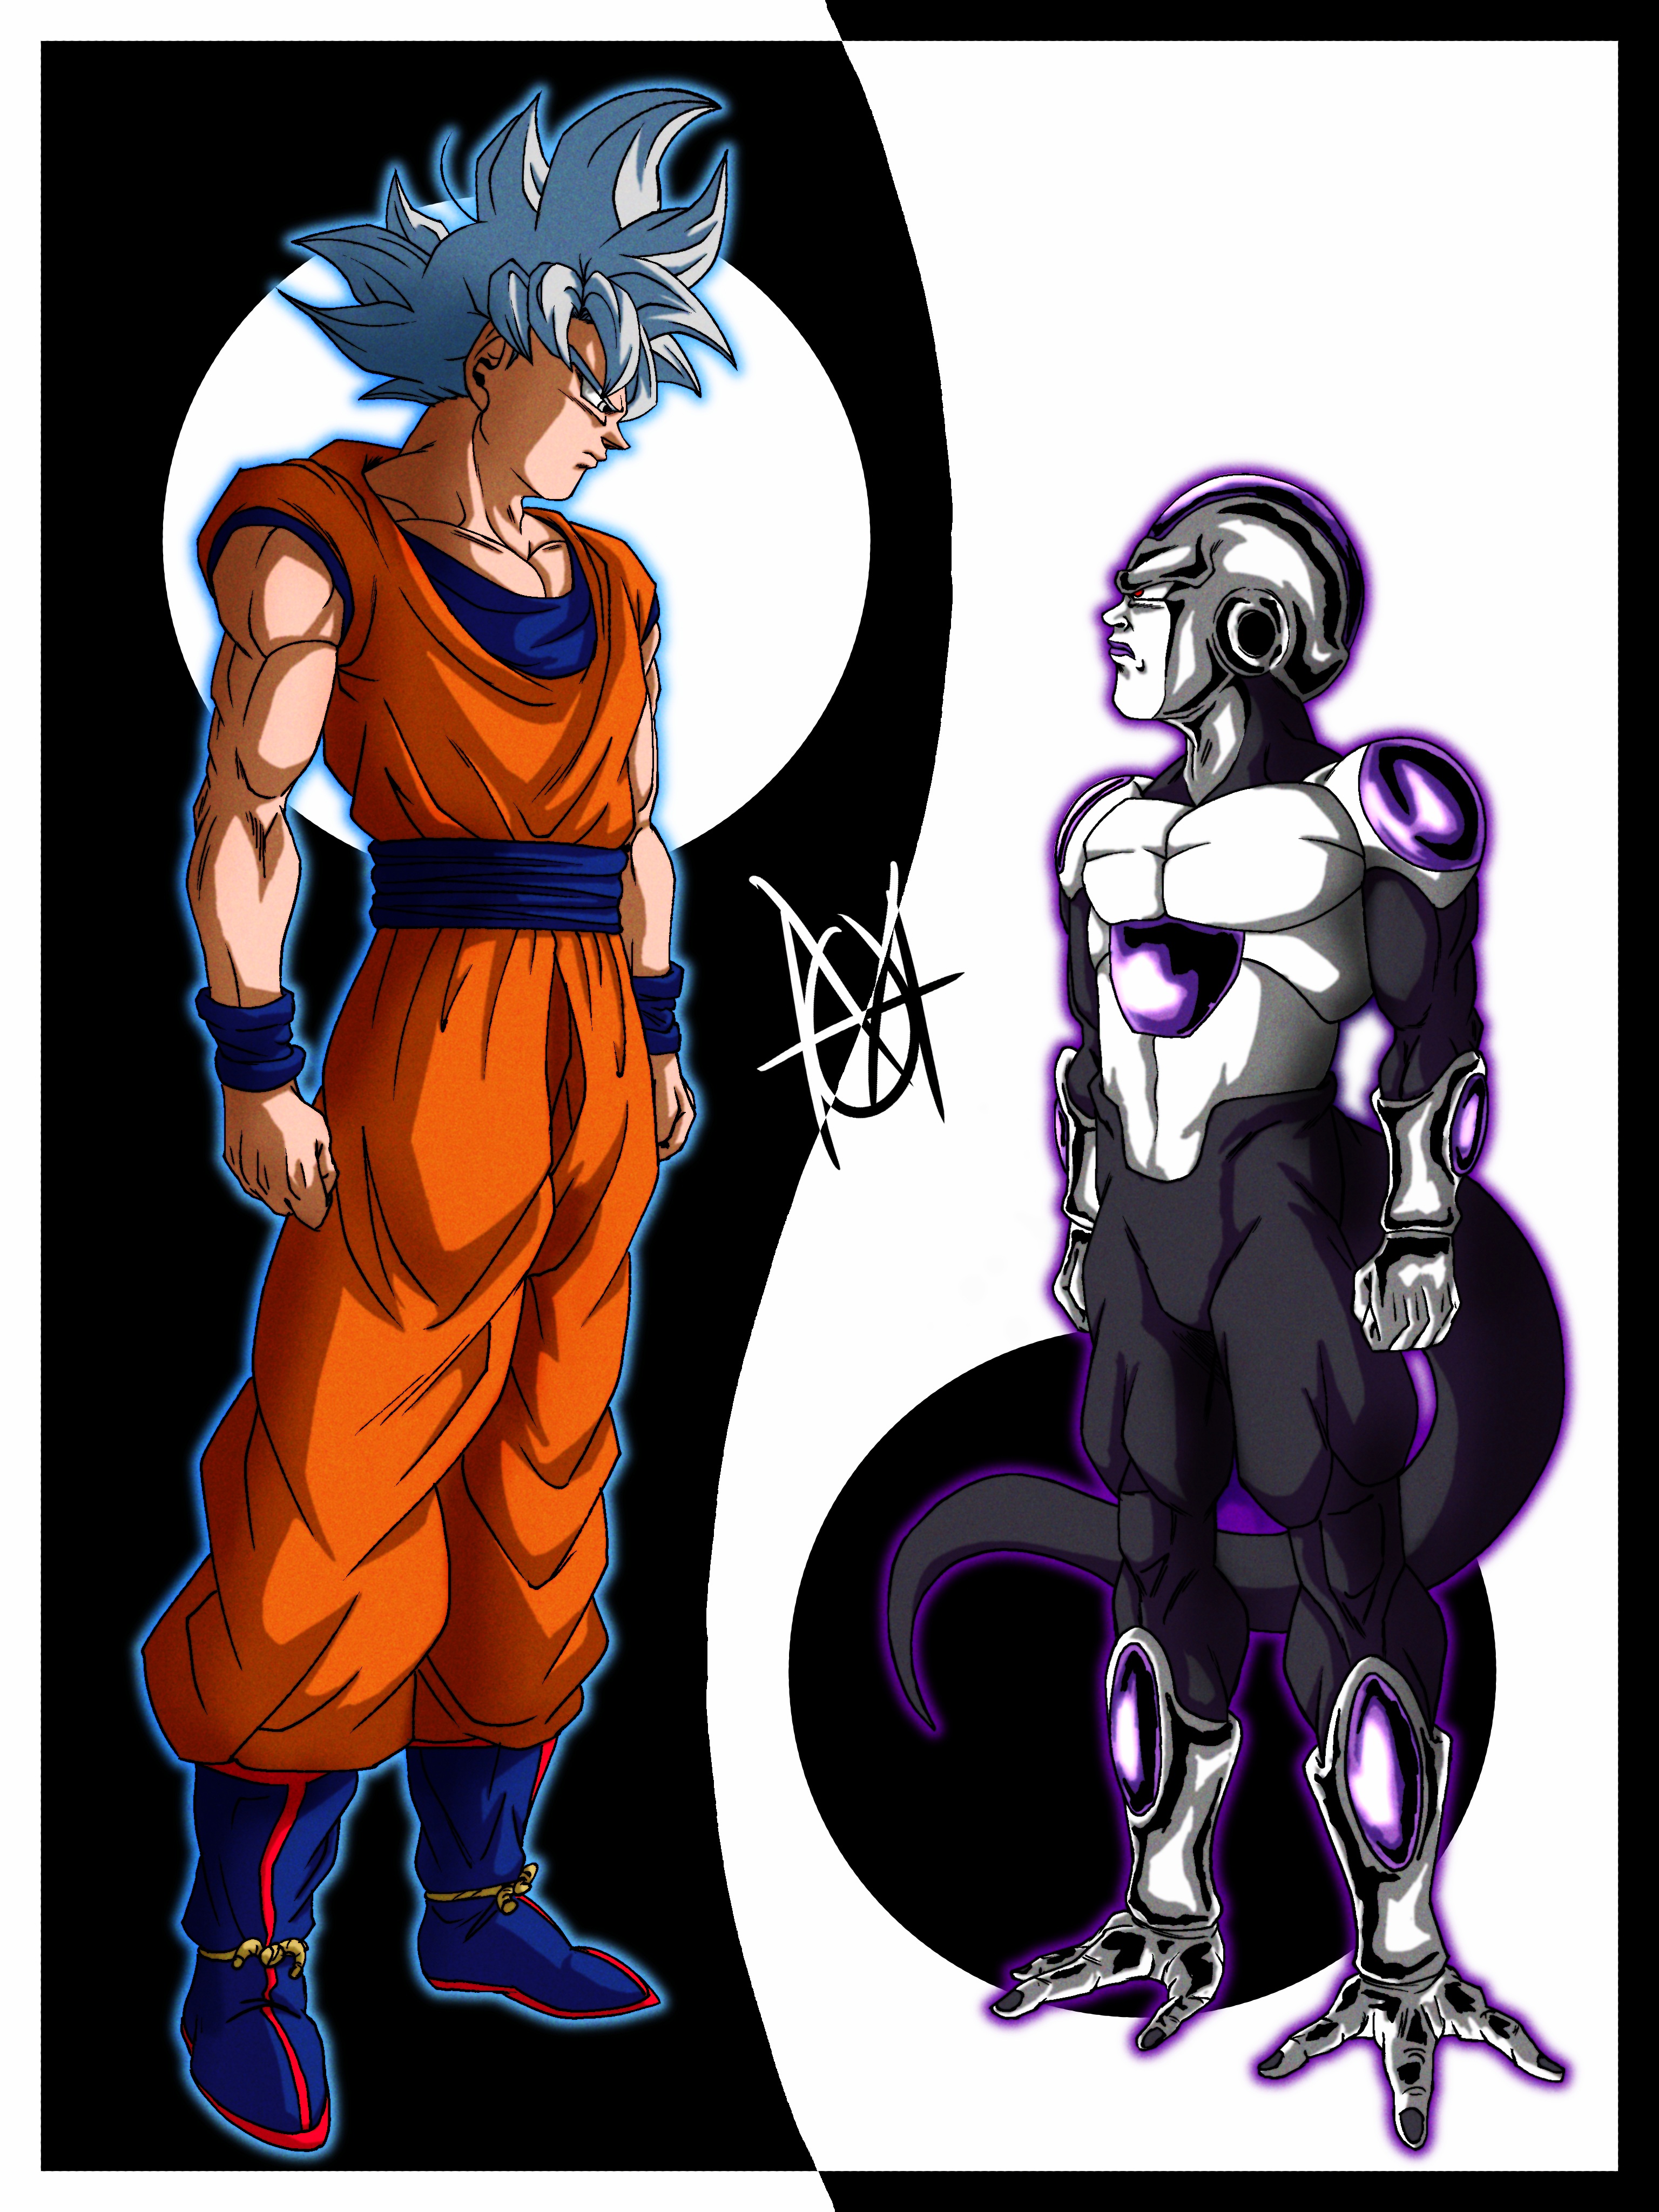 Goku vs Freeza by ZehB on DeviantArt